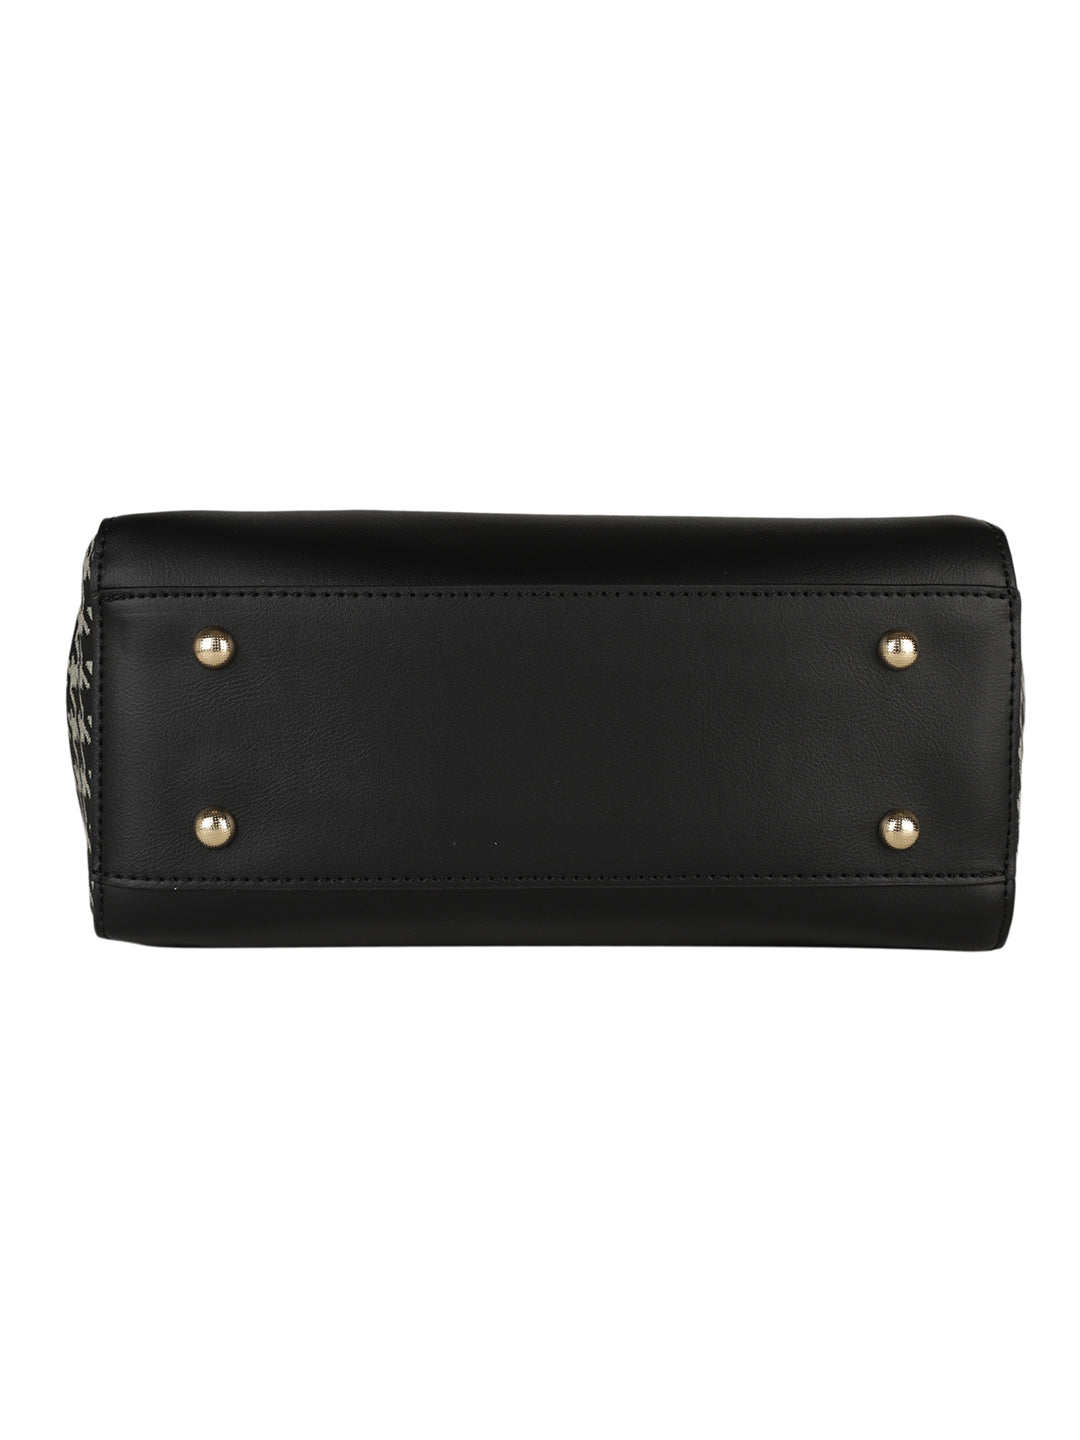 MINI WESST Women's Black Handheld Bag(MWHB110BL)